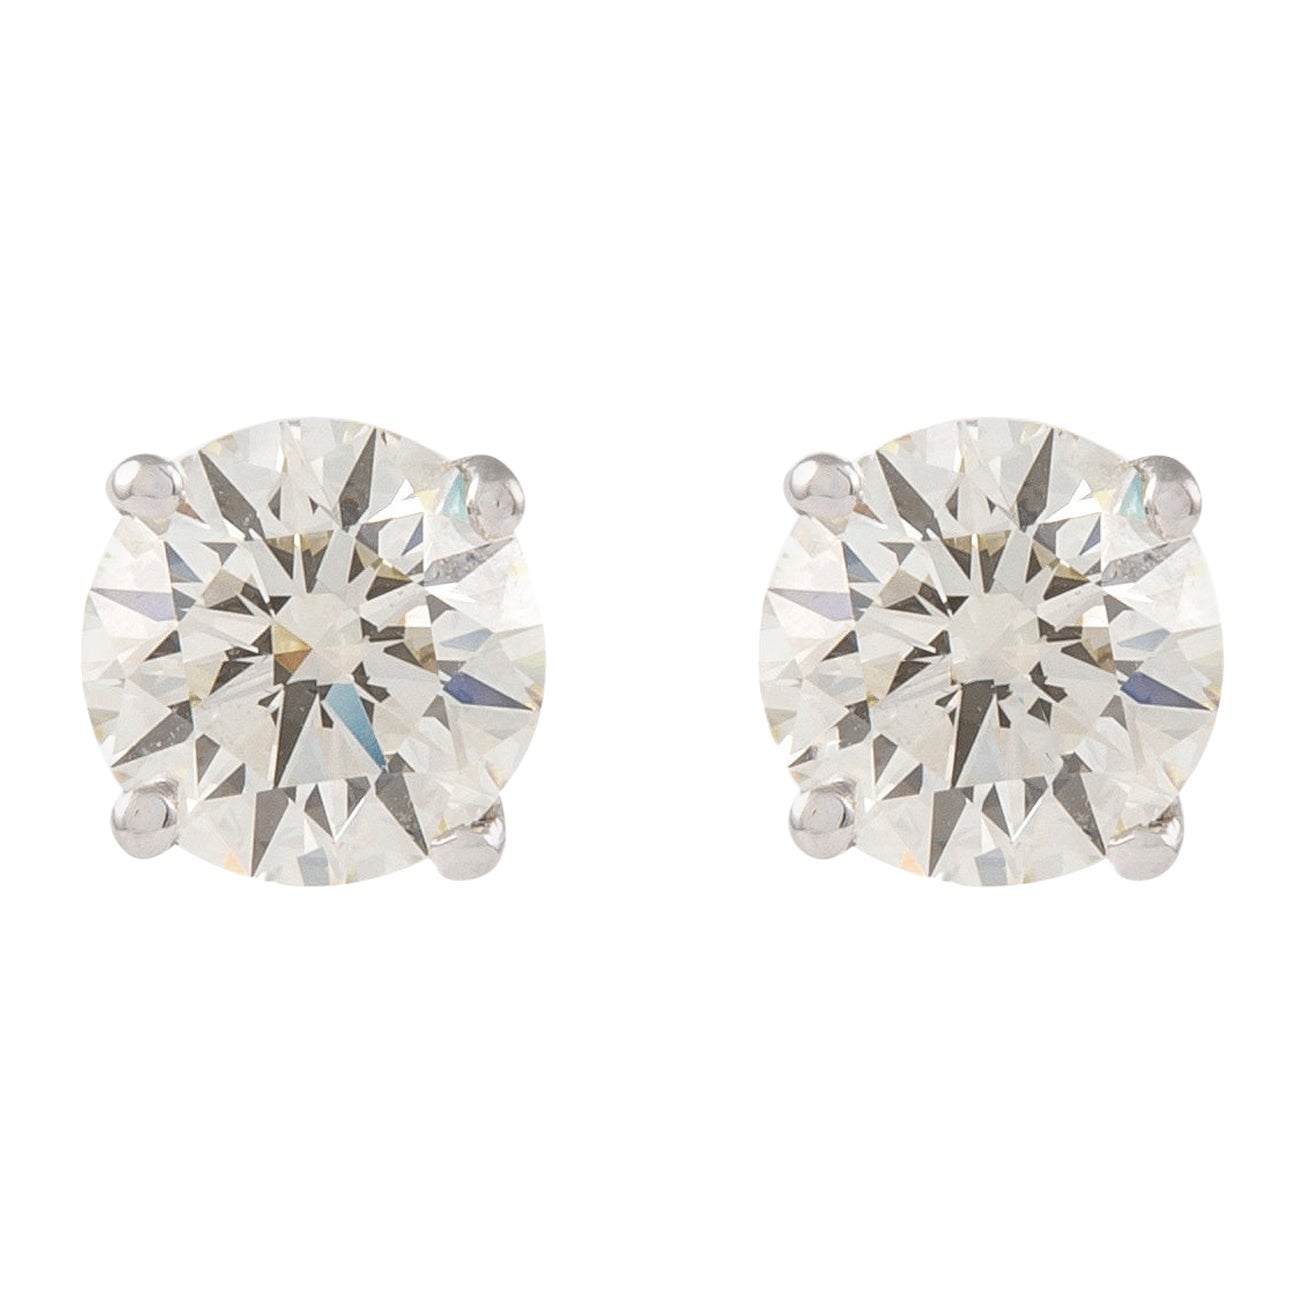 Alexander EGL Certified 1.44 Carat Diamond Stud Earrings White Gold